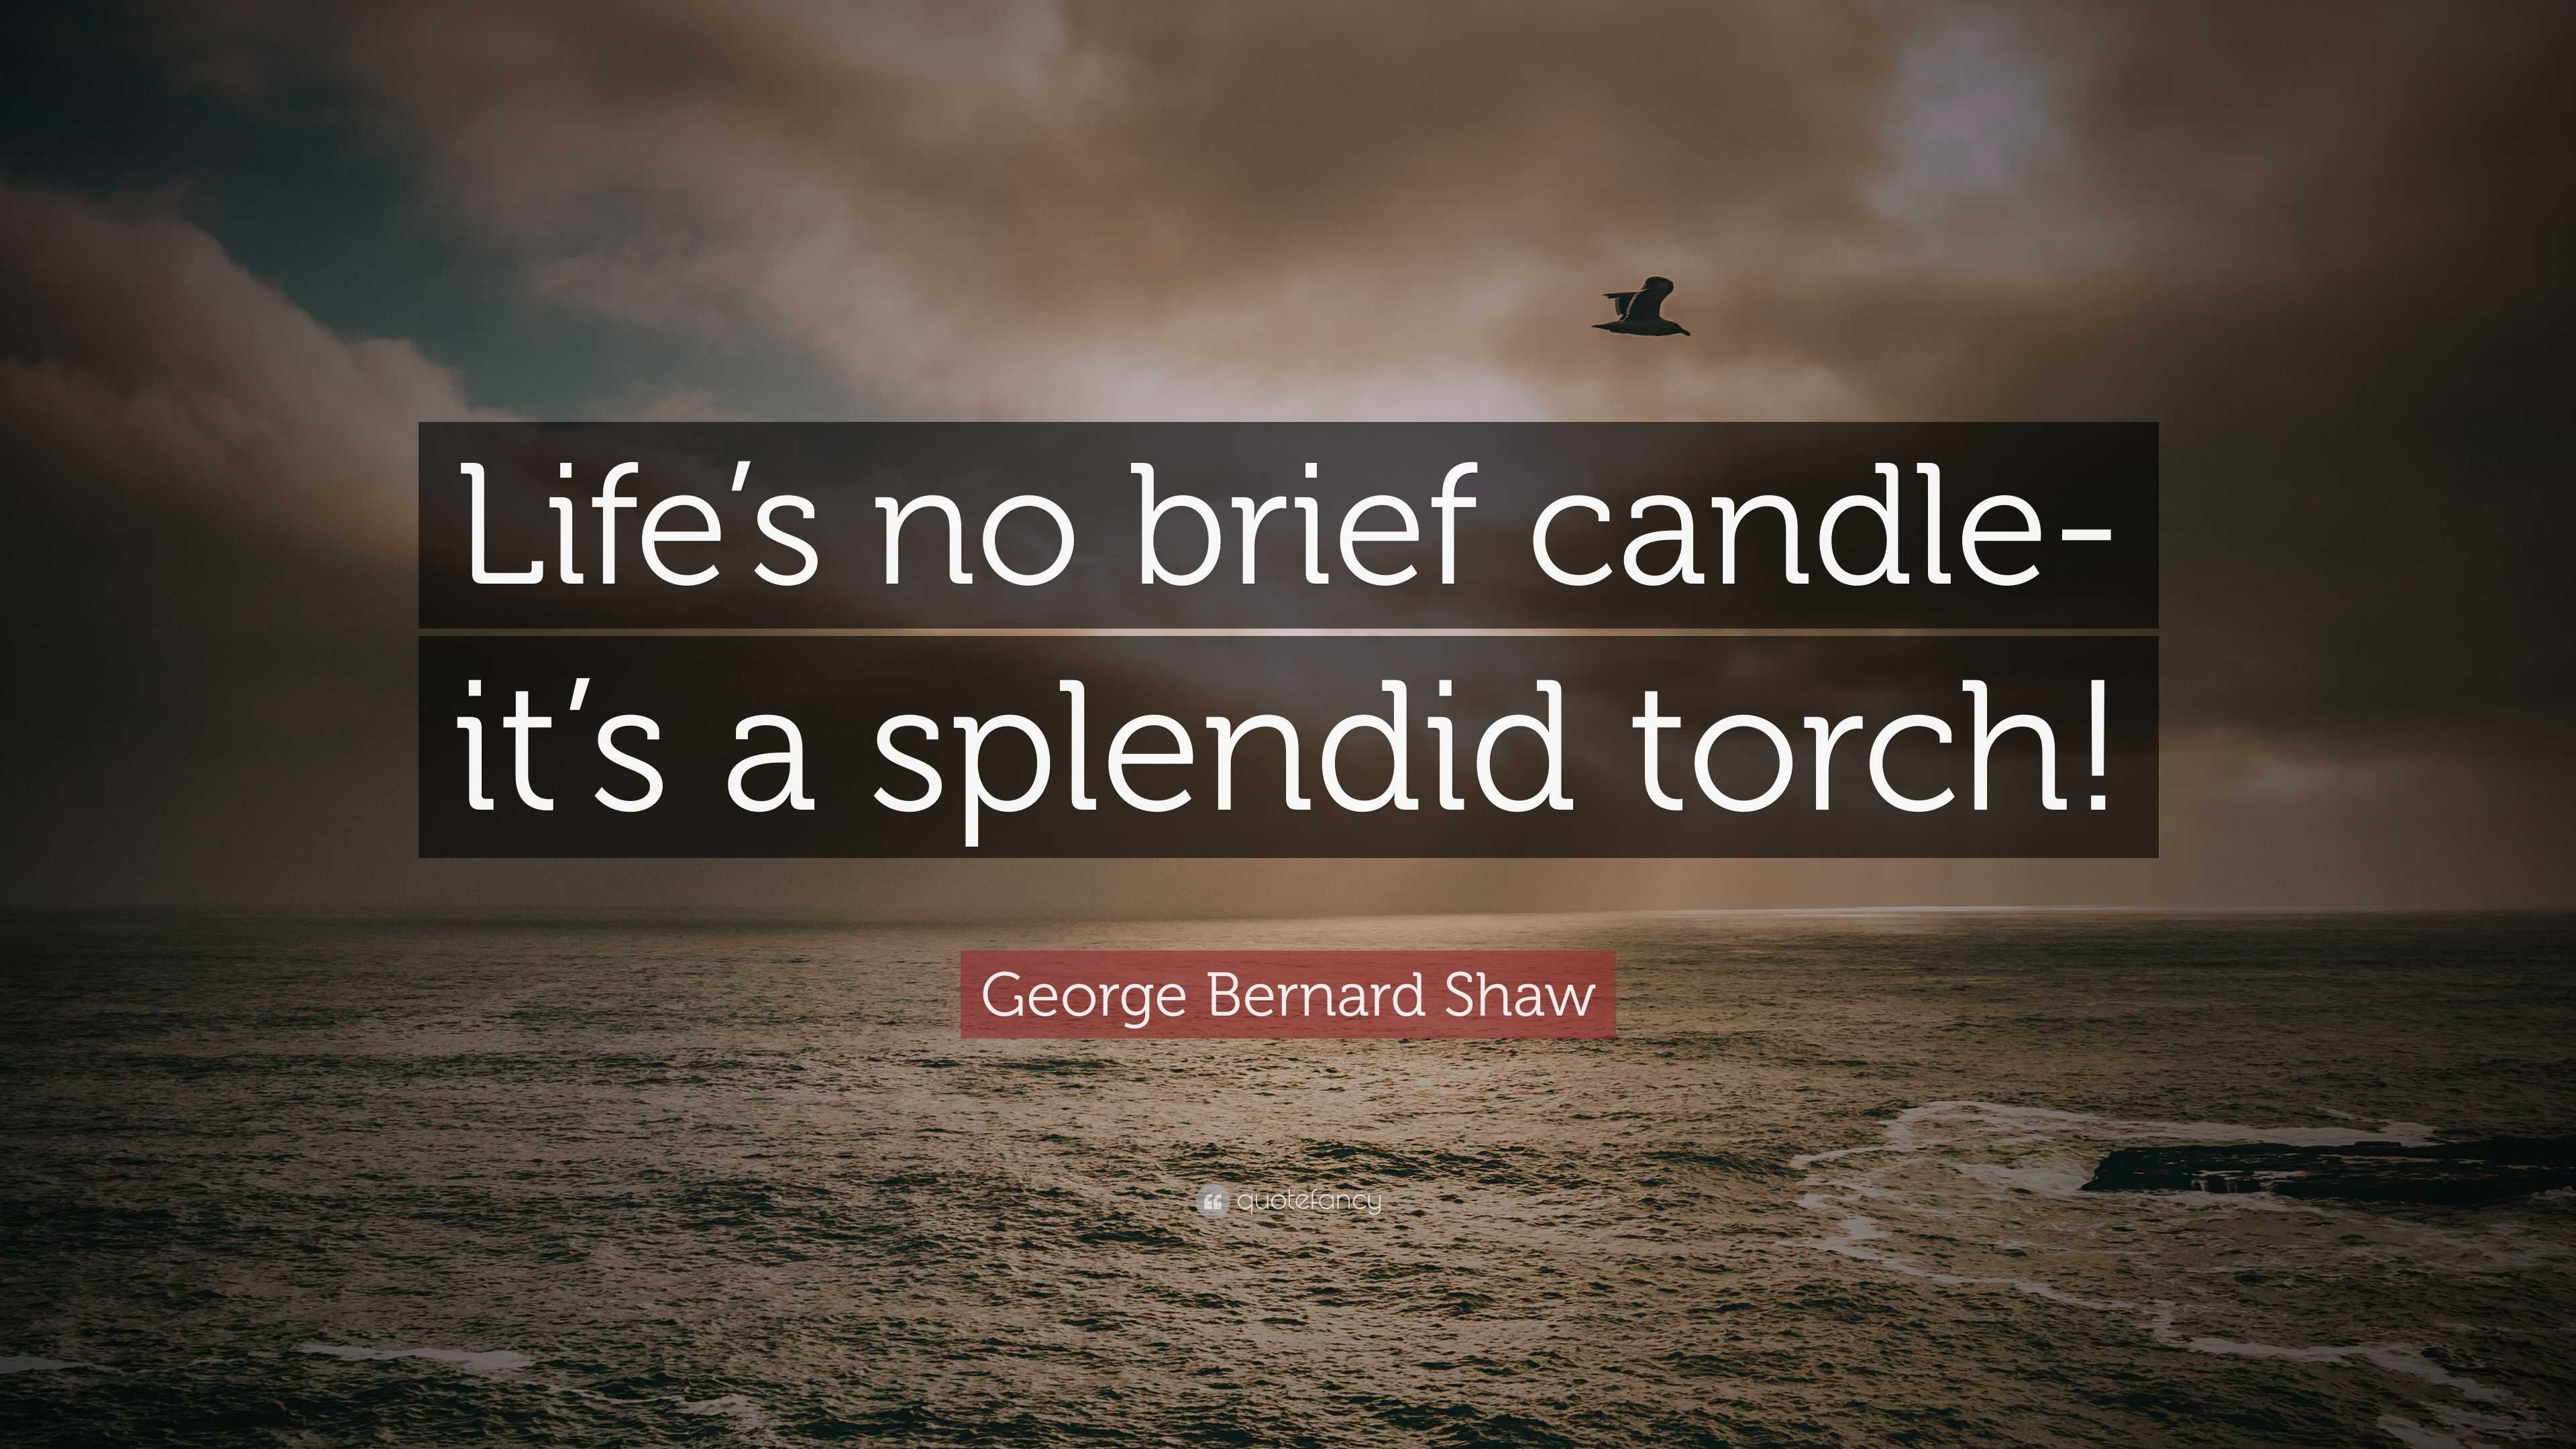 Bernard Shaw Quote “Life’s no brief candleit’s a splendid torch!”